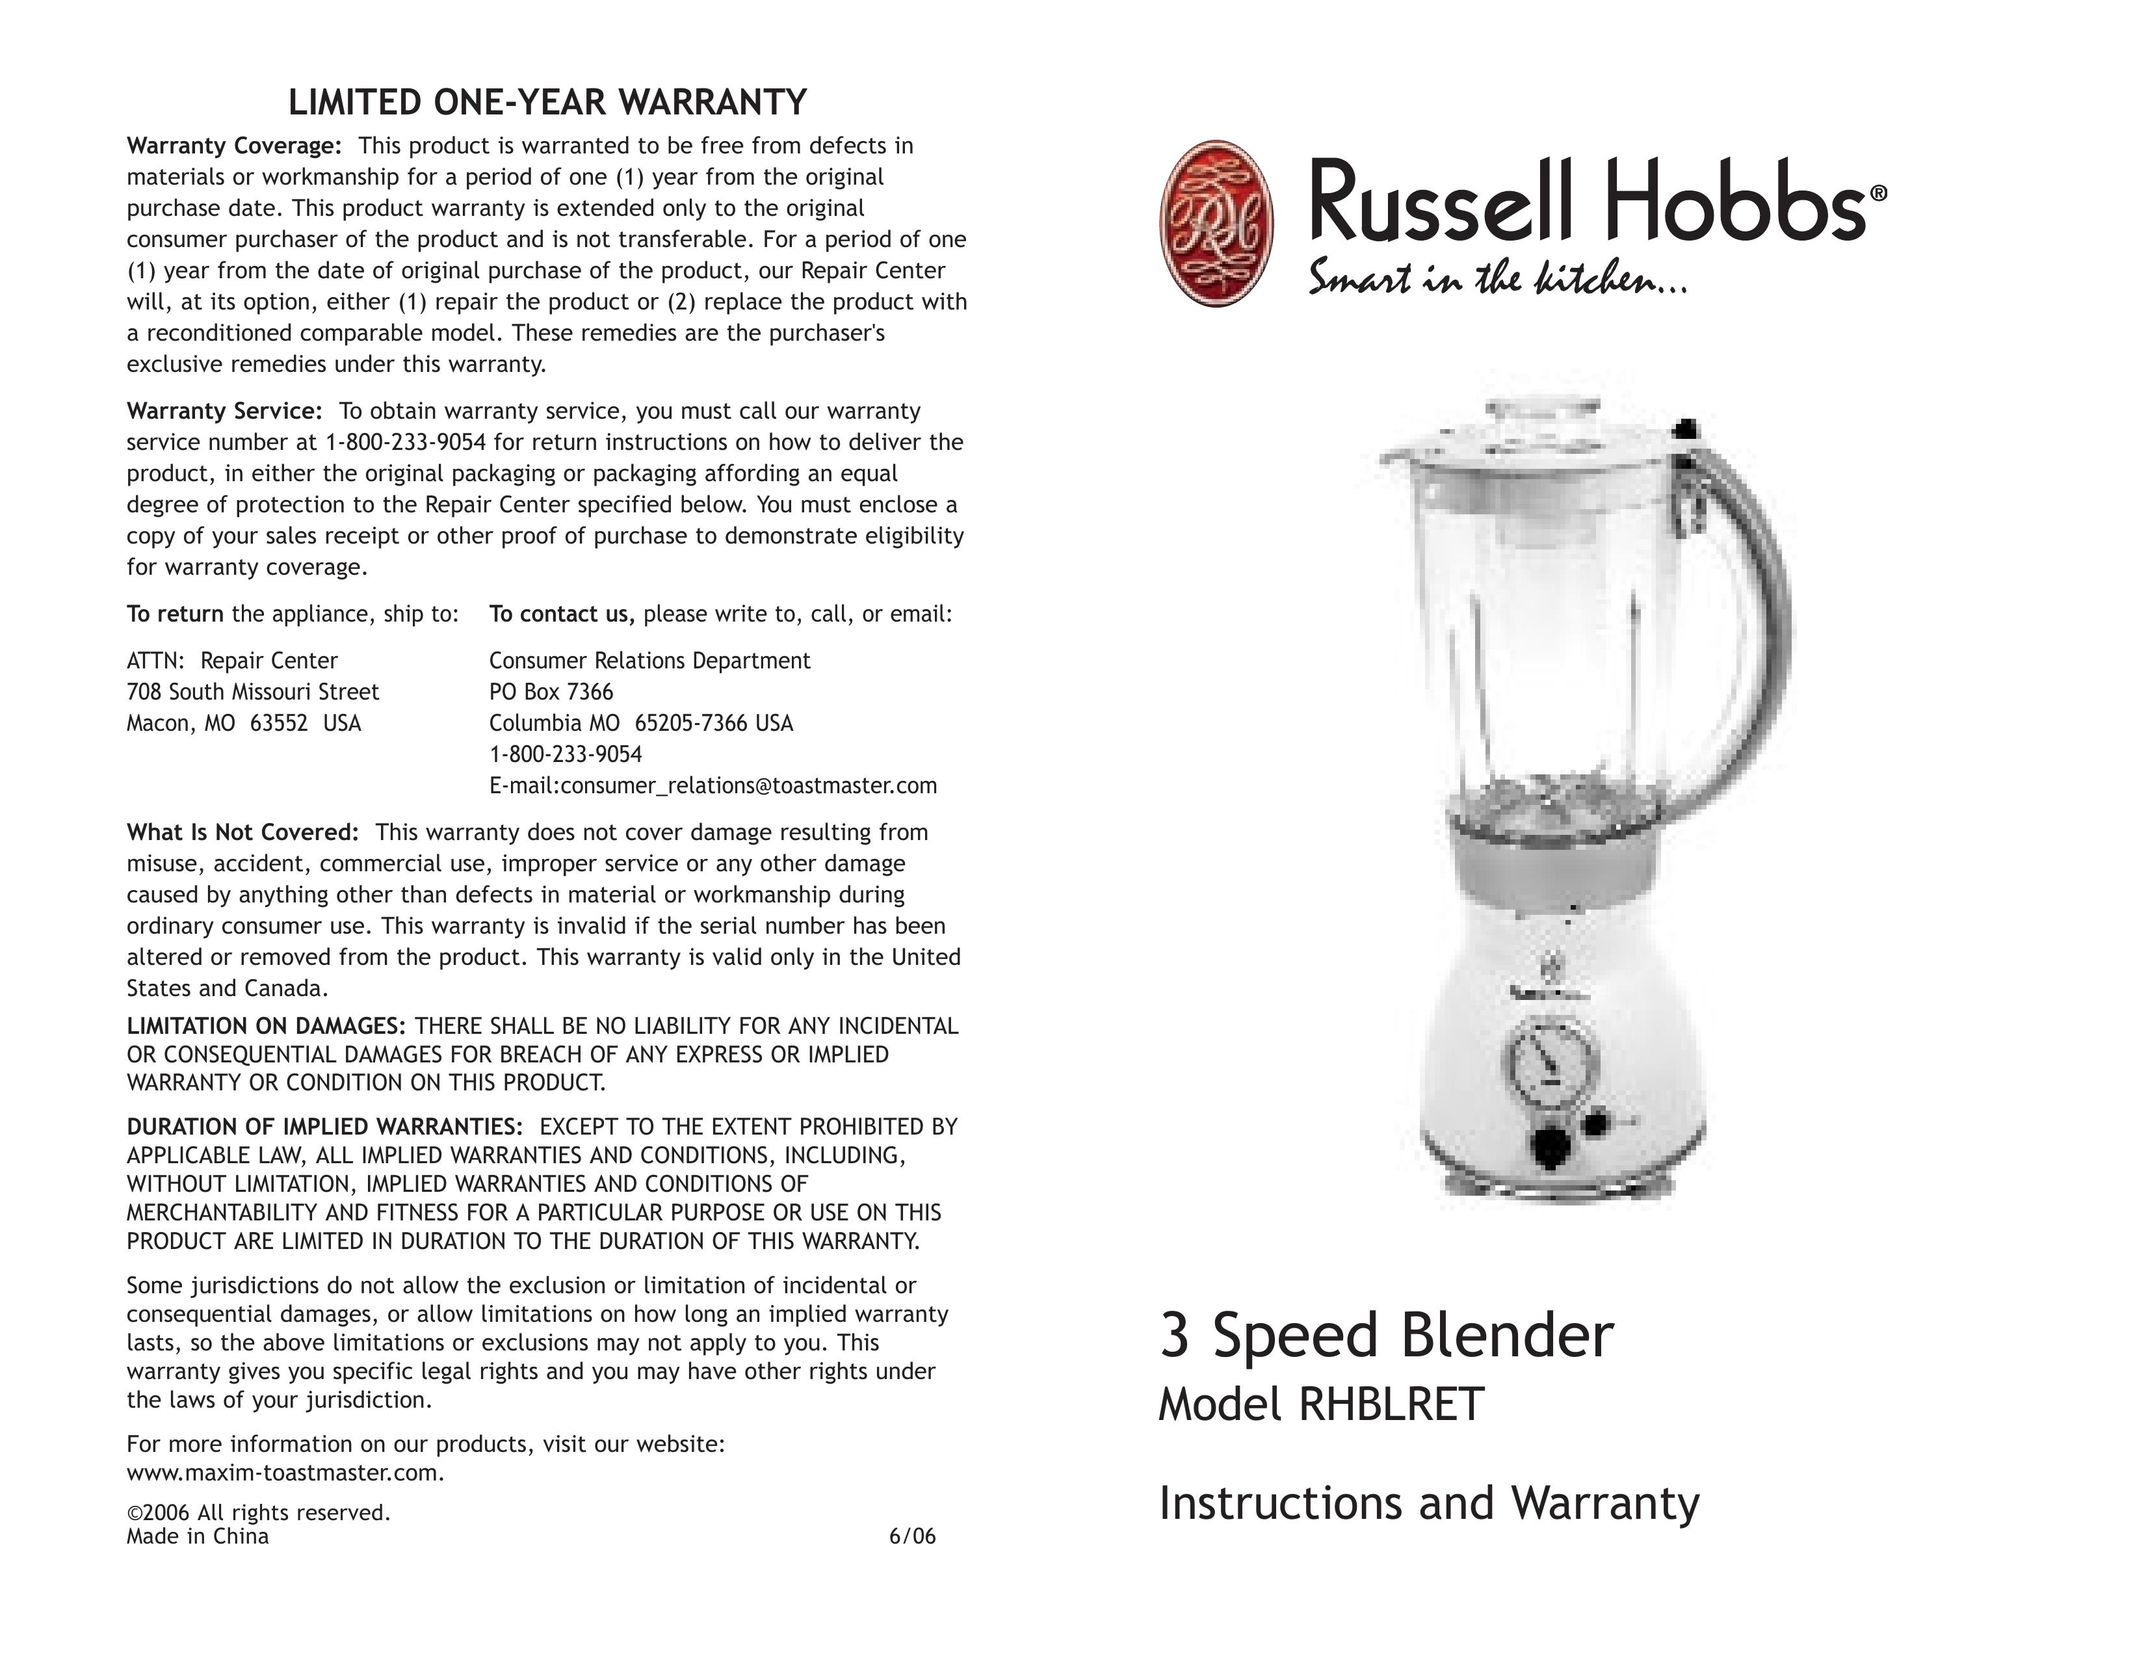 Toastmaster RHBLRET Blender User Manual